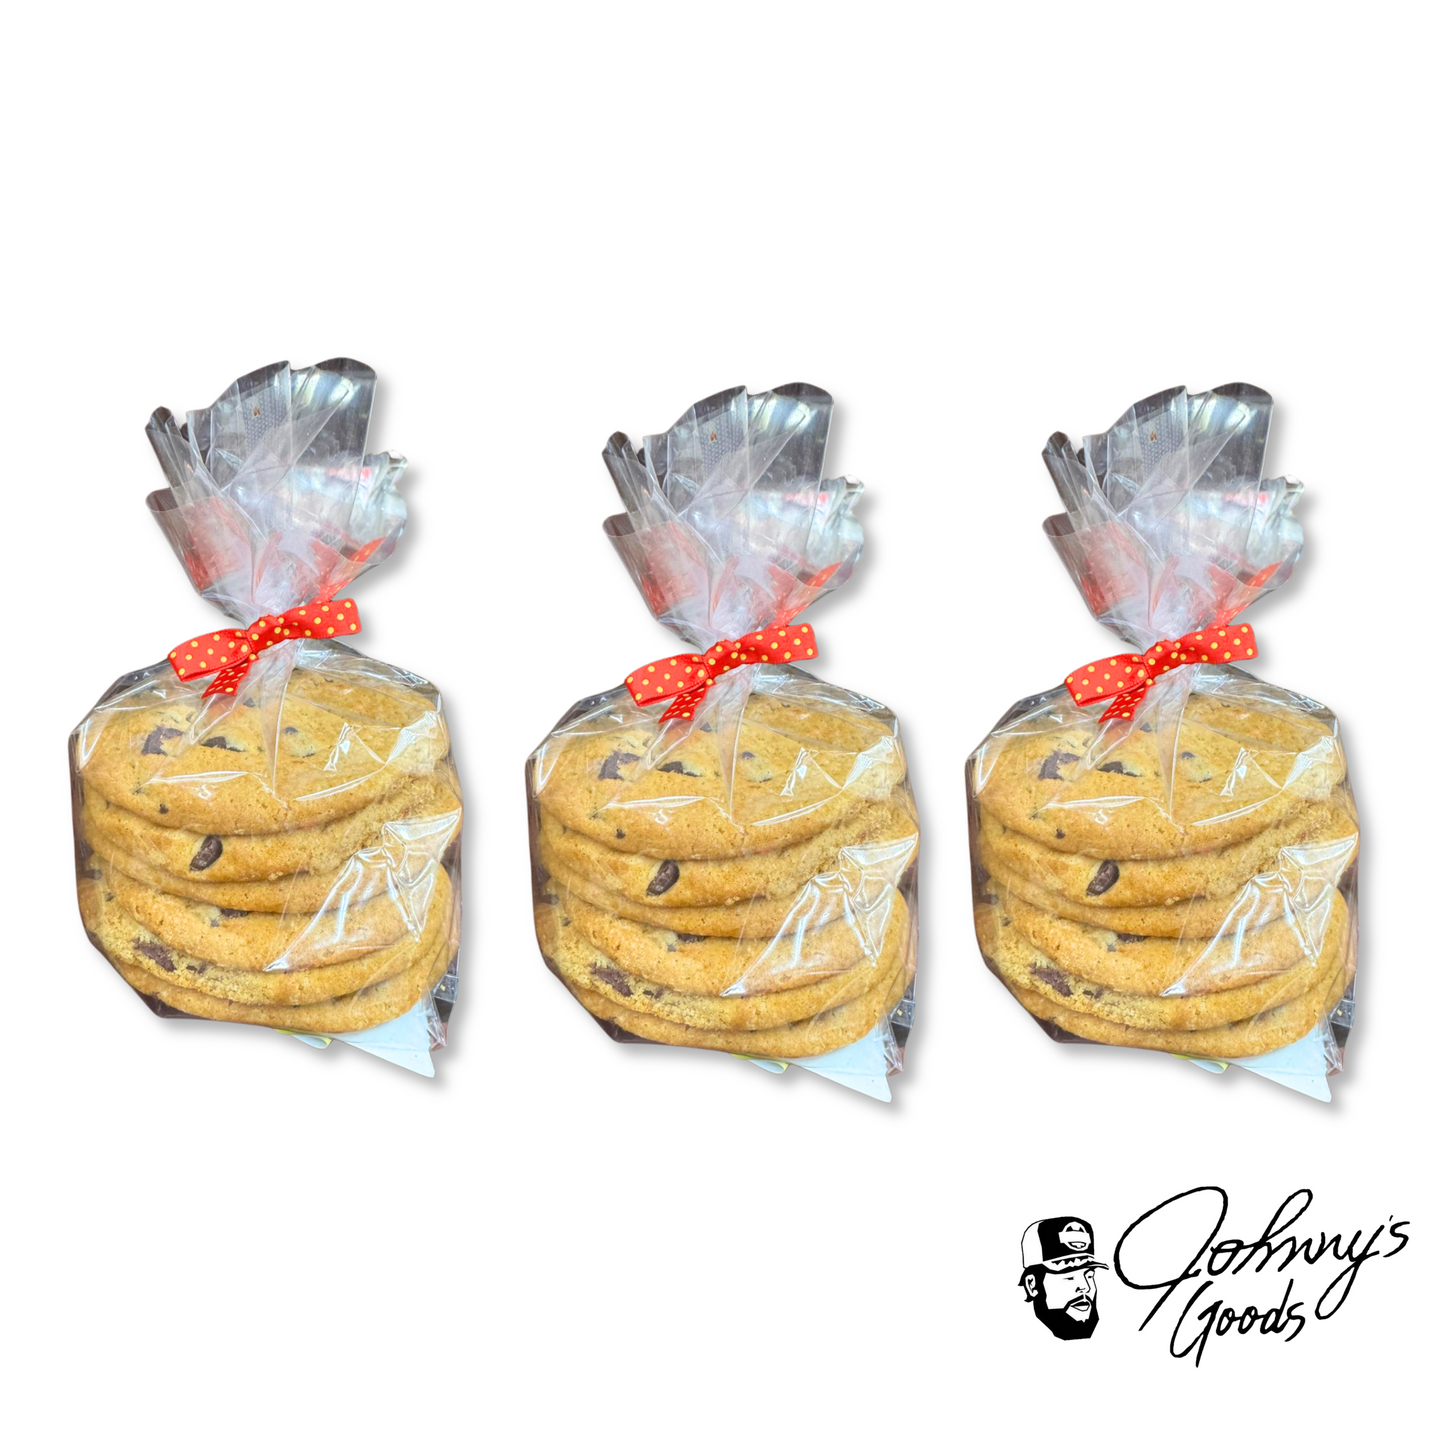 Buc-ee's Chocolate Chunk Cookies -  6 Pack